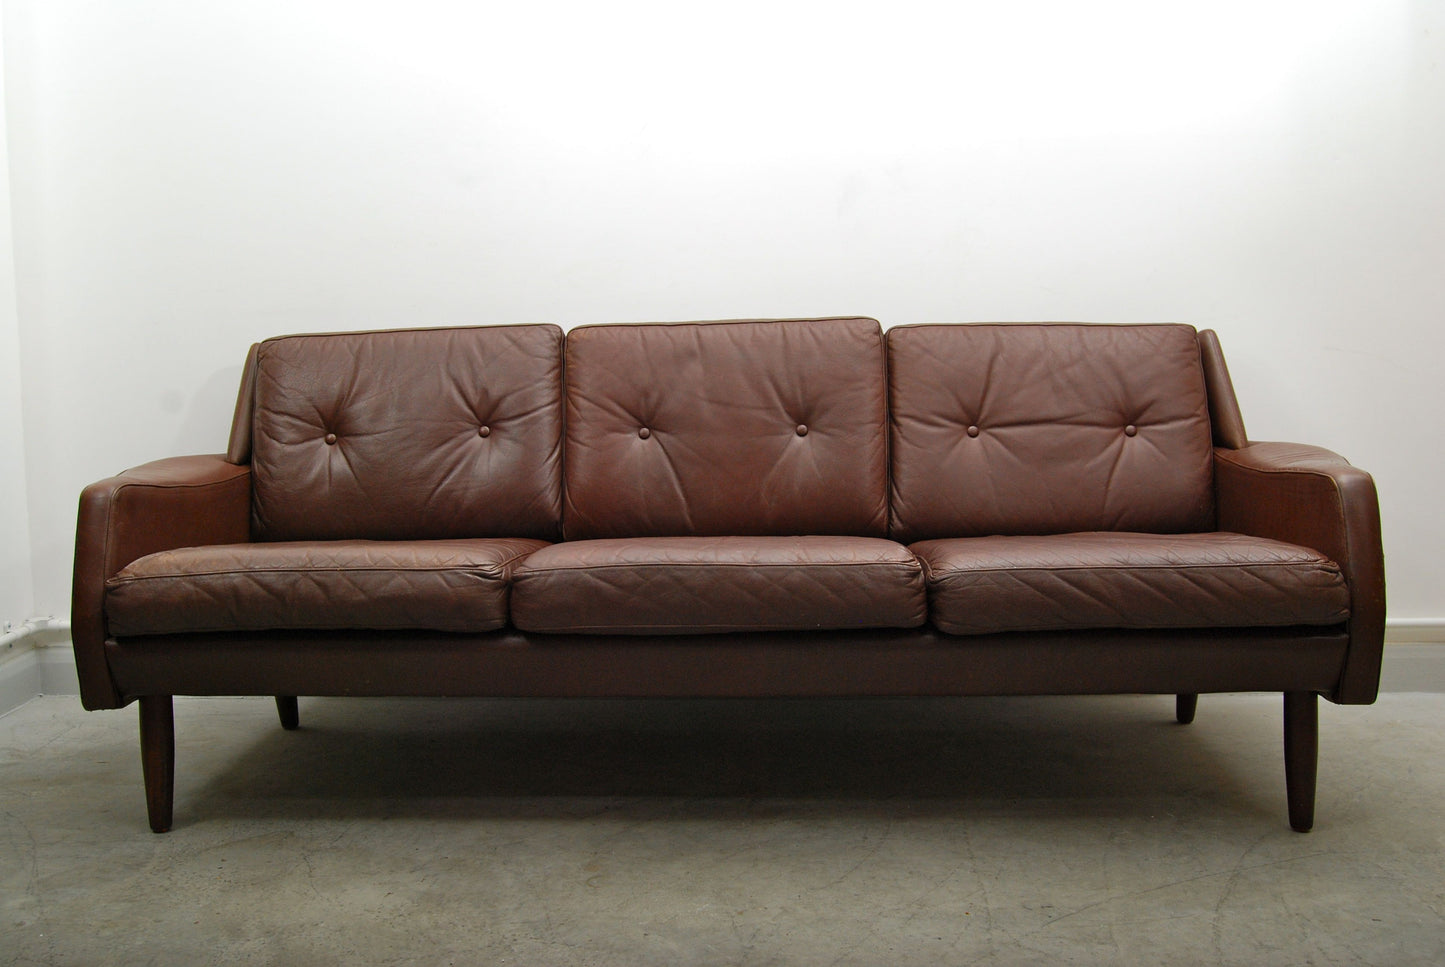 1970s three seat leather sofa